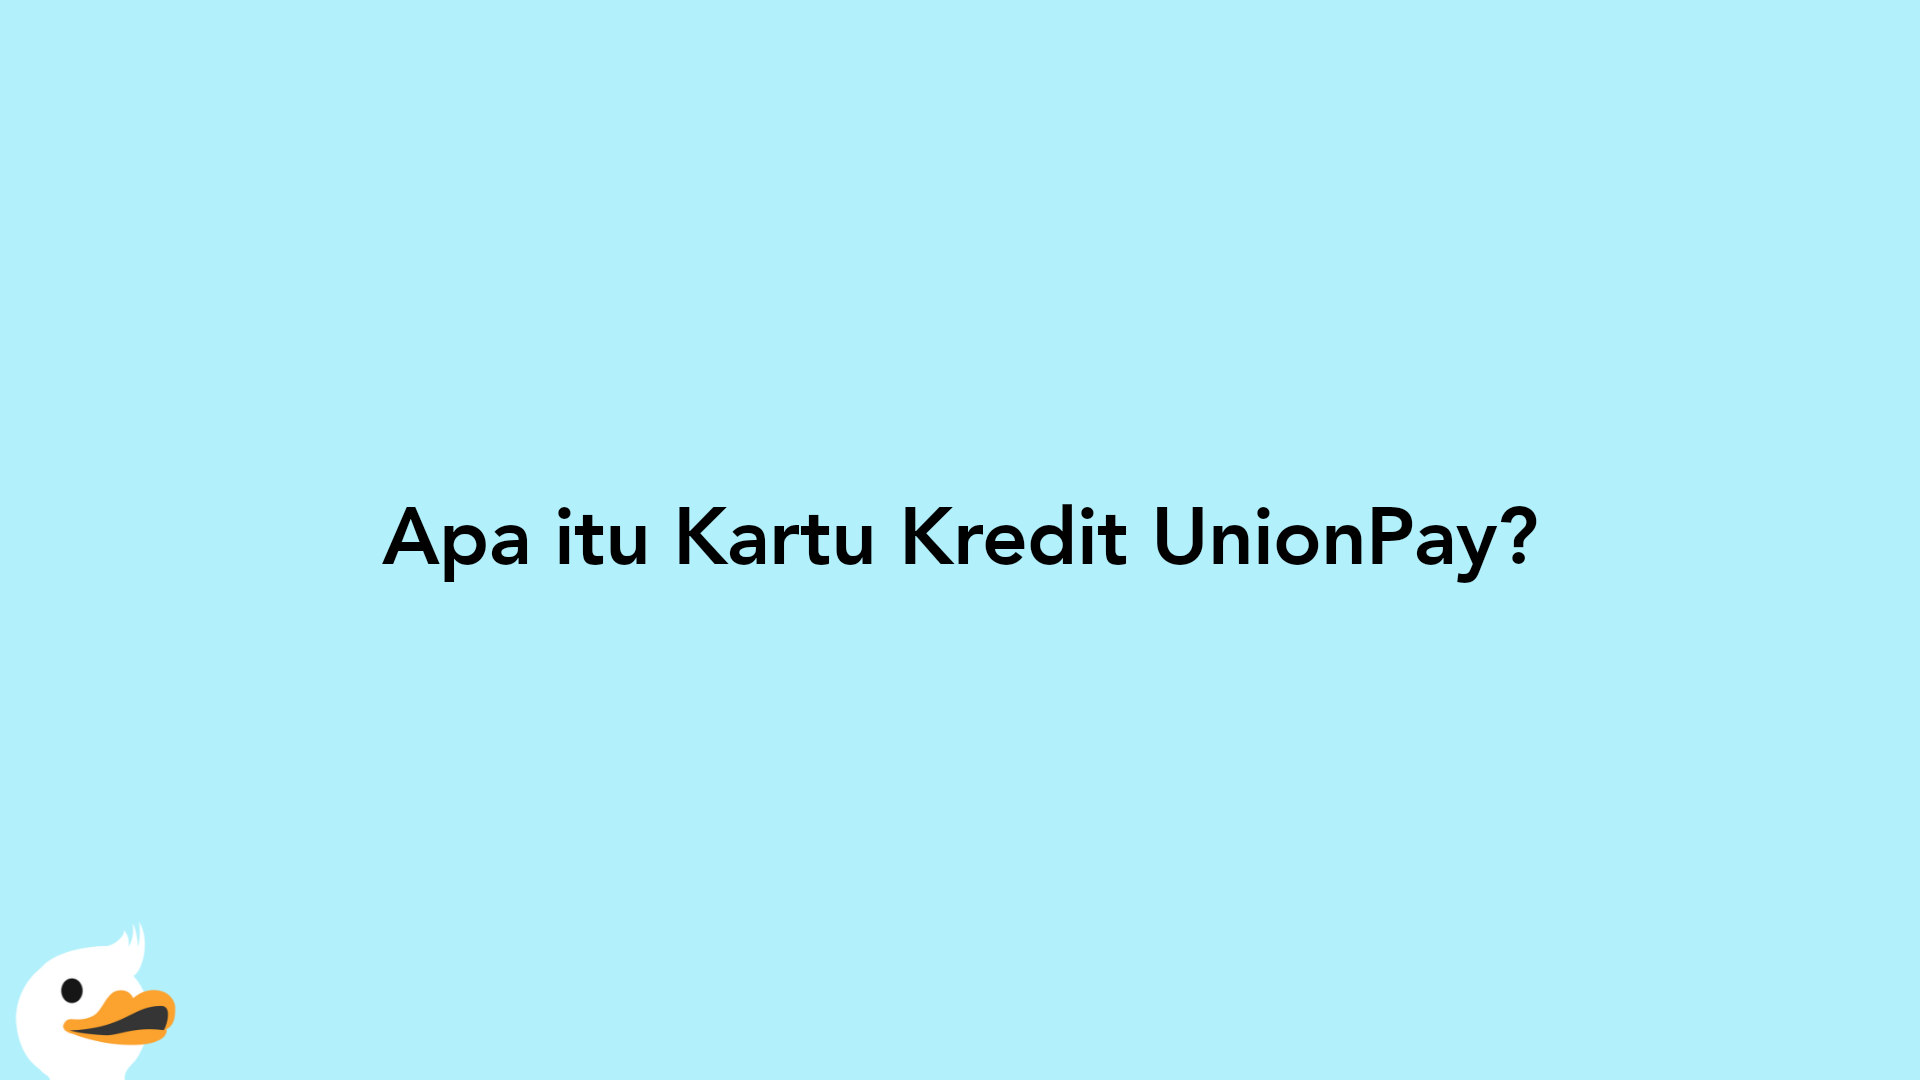 Apa itu Kartu Kredit UnionPay?